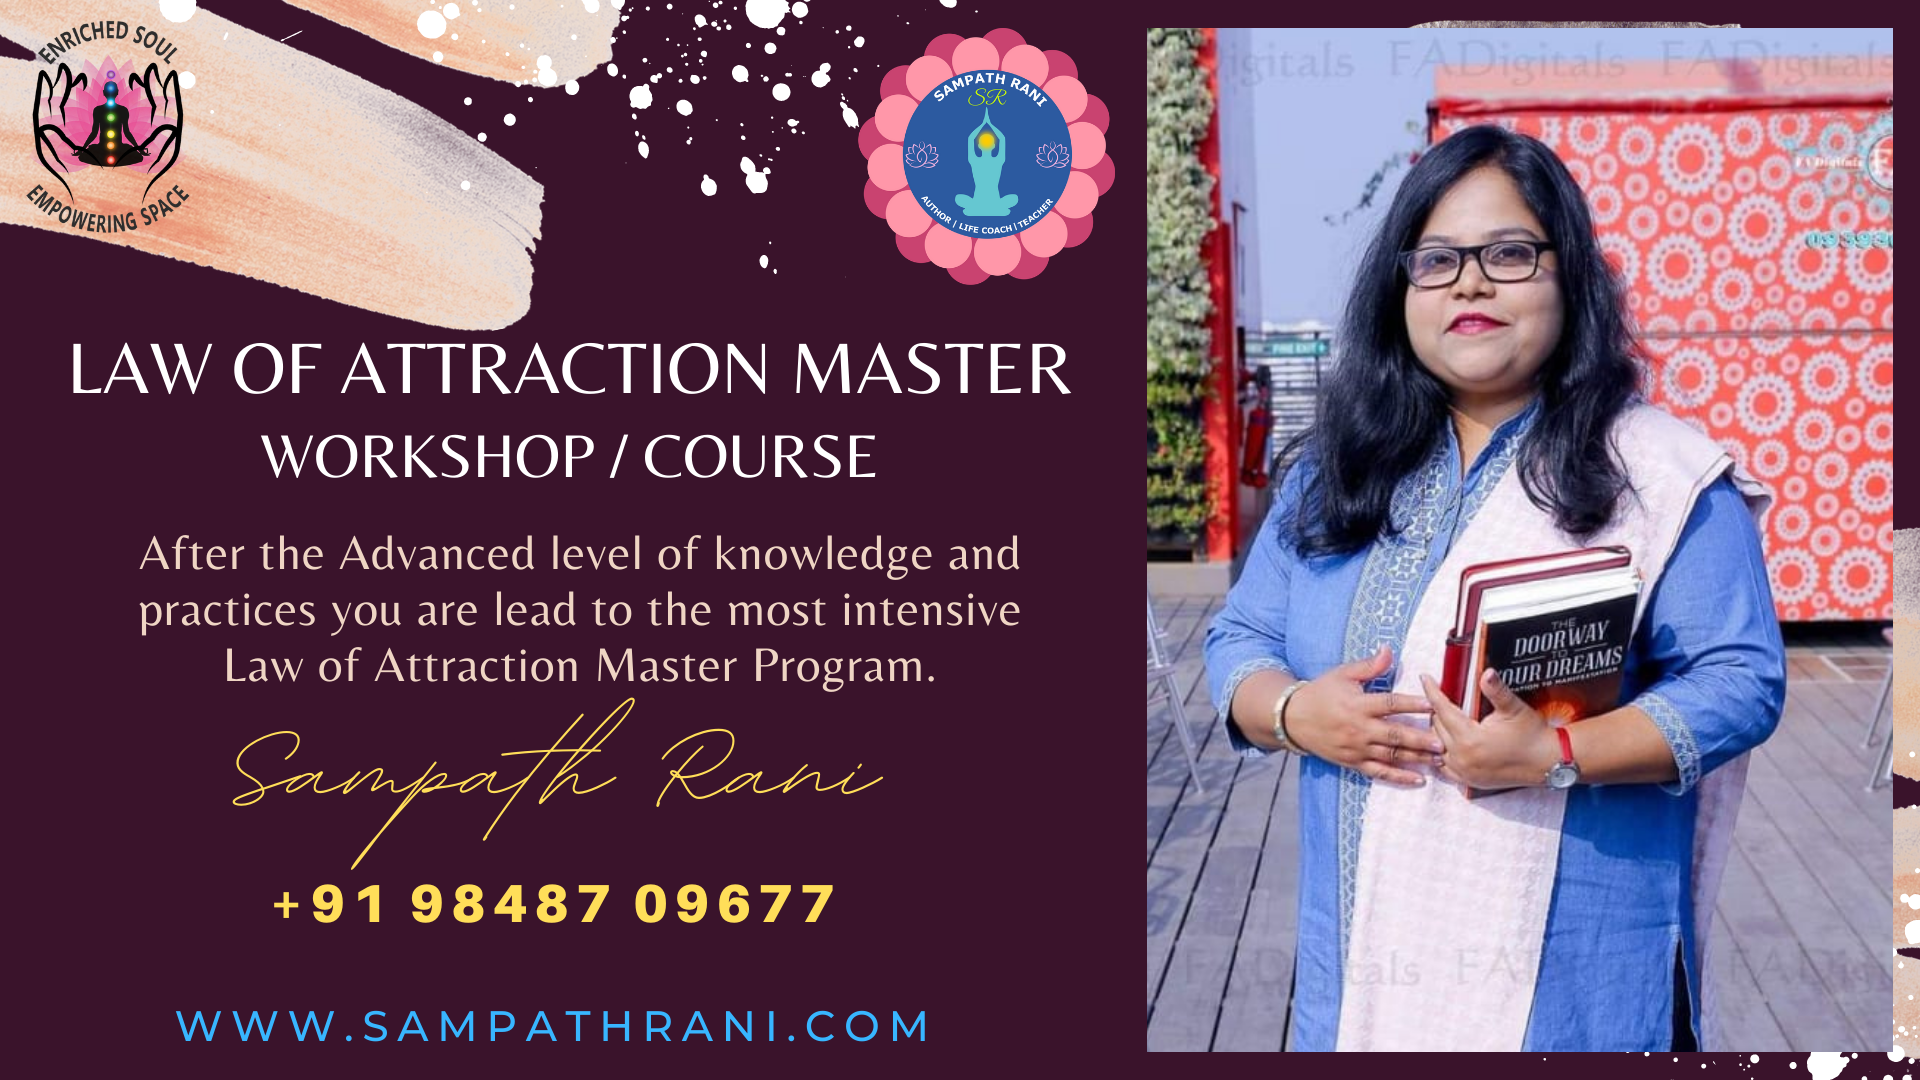 Law of Attraction Master Workshop, Course - by Sampath Rani - Jayanagar